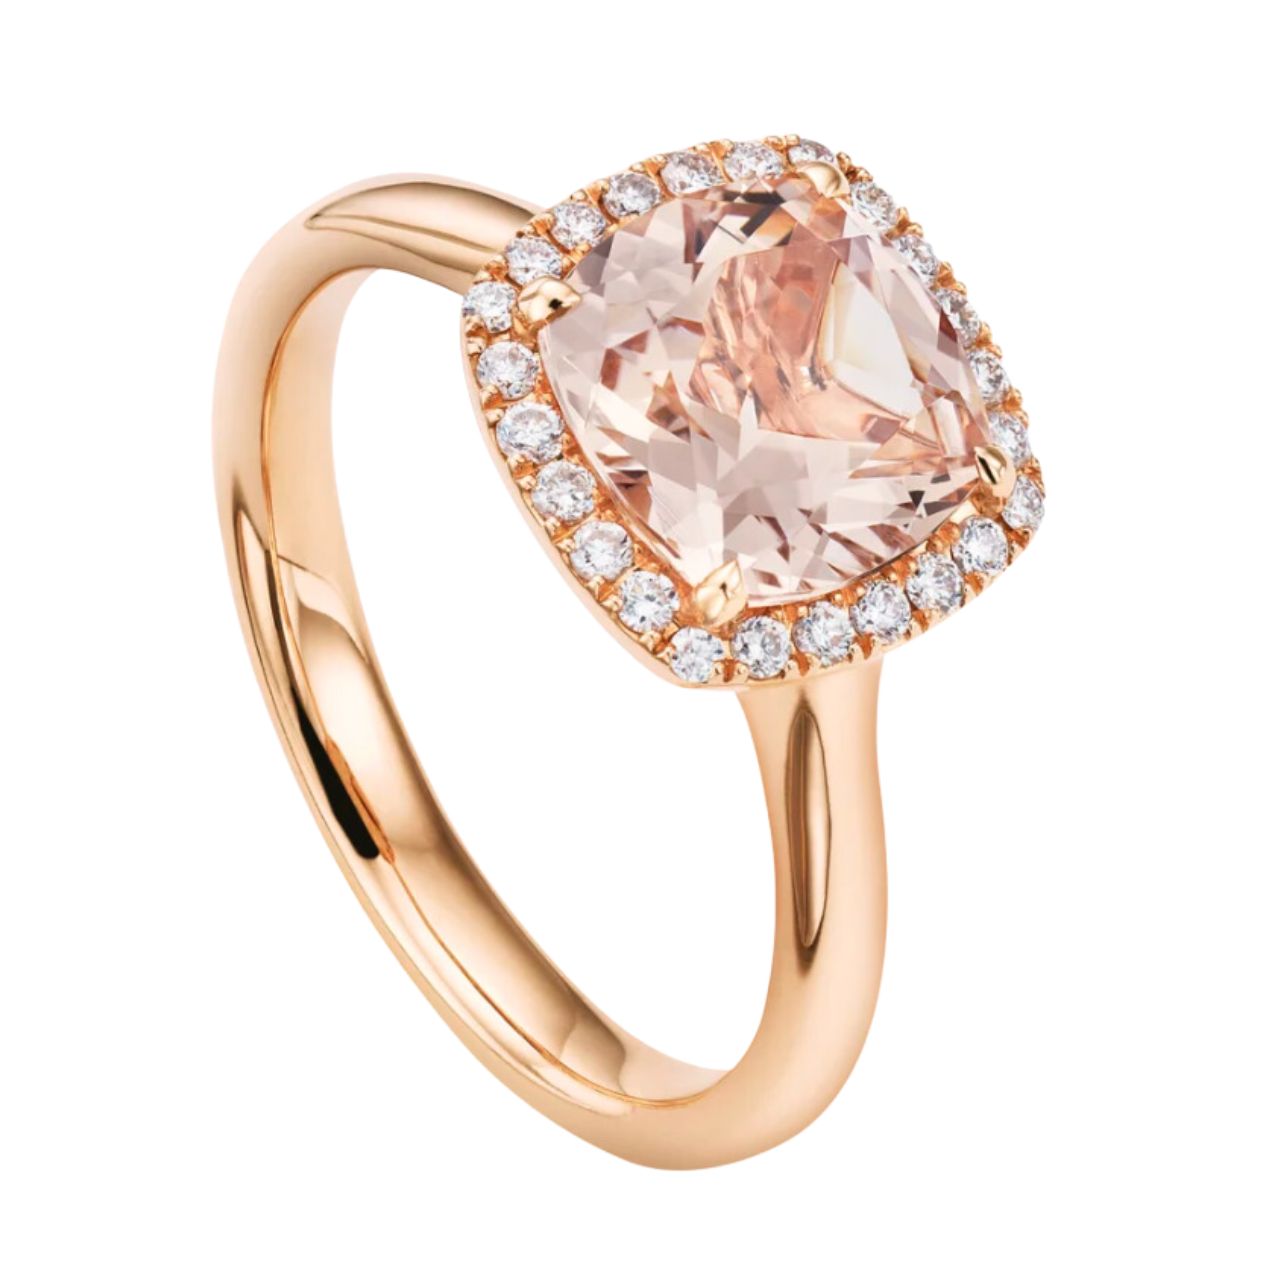 Blush ring with morganite and diamonds.